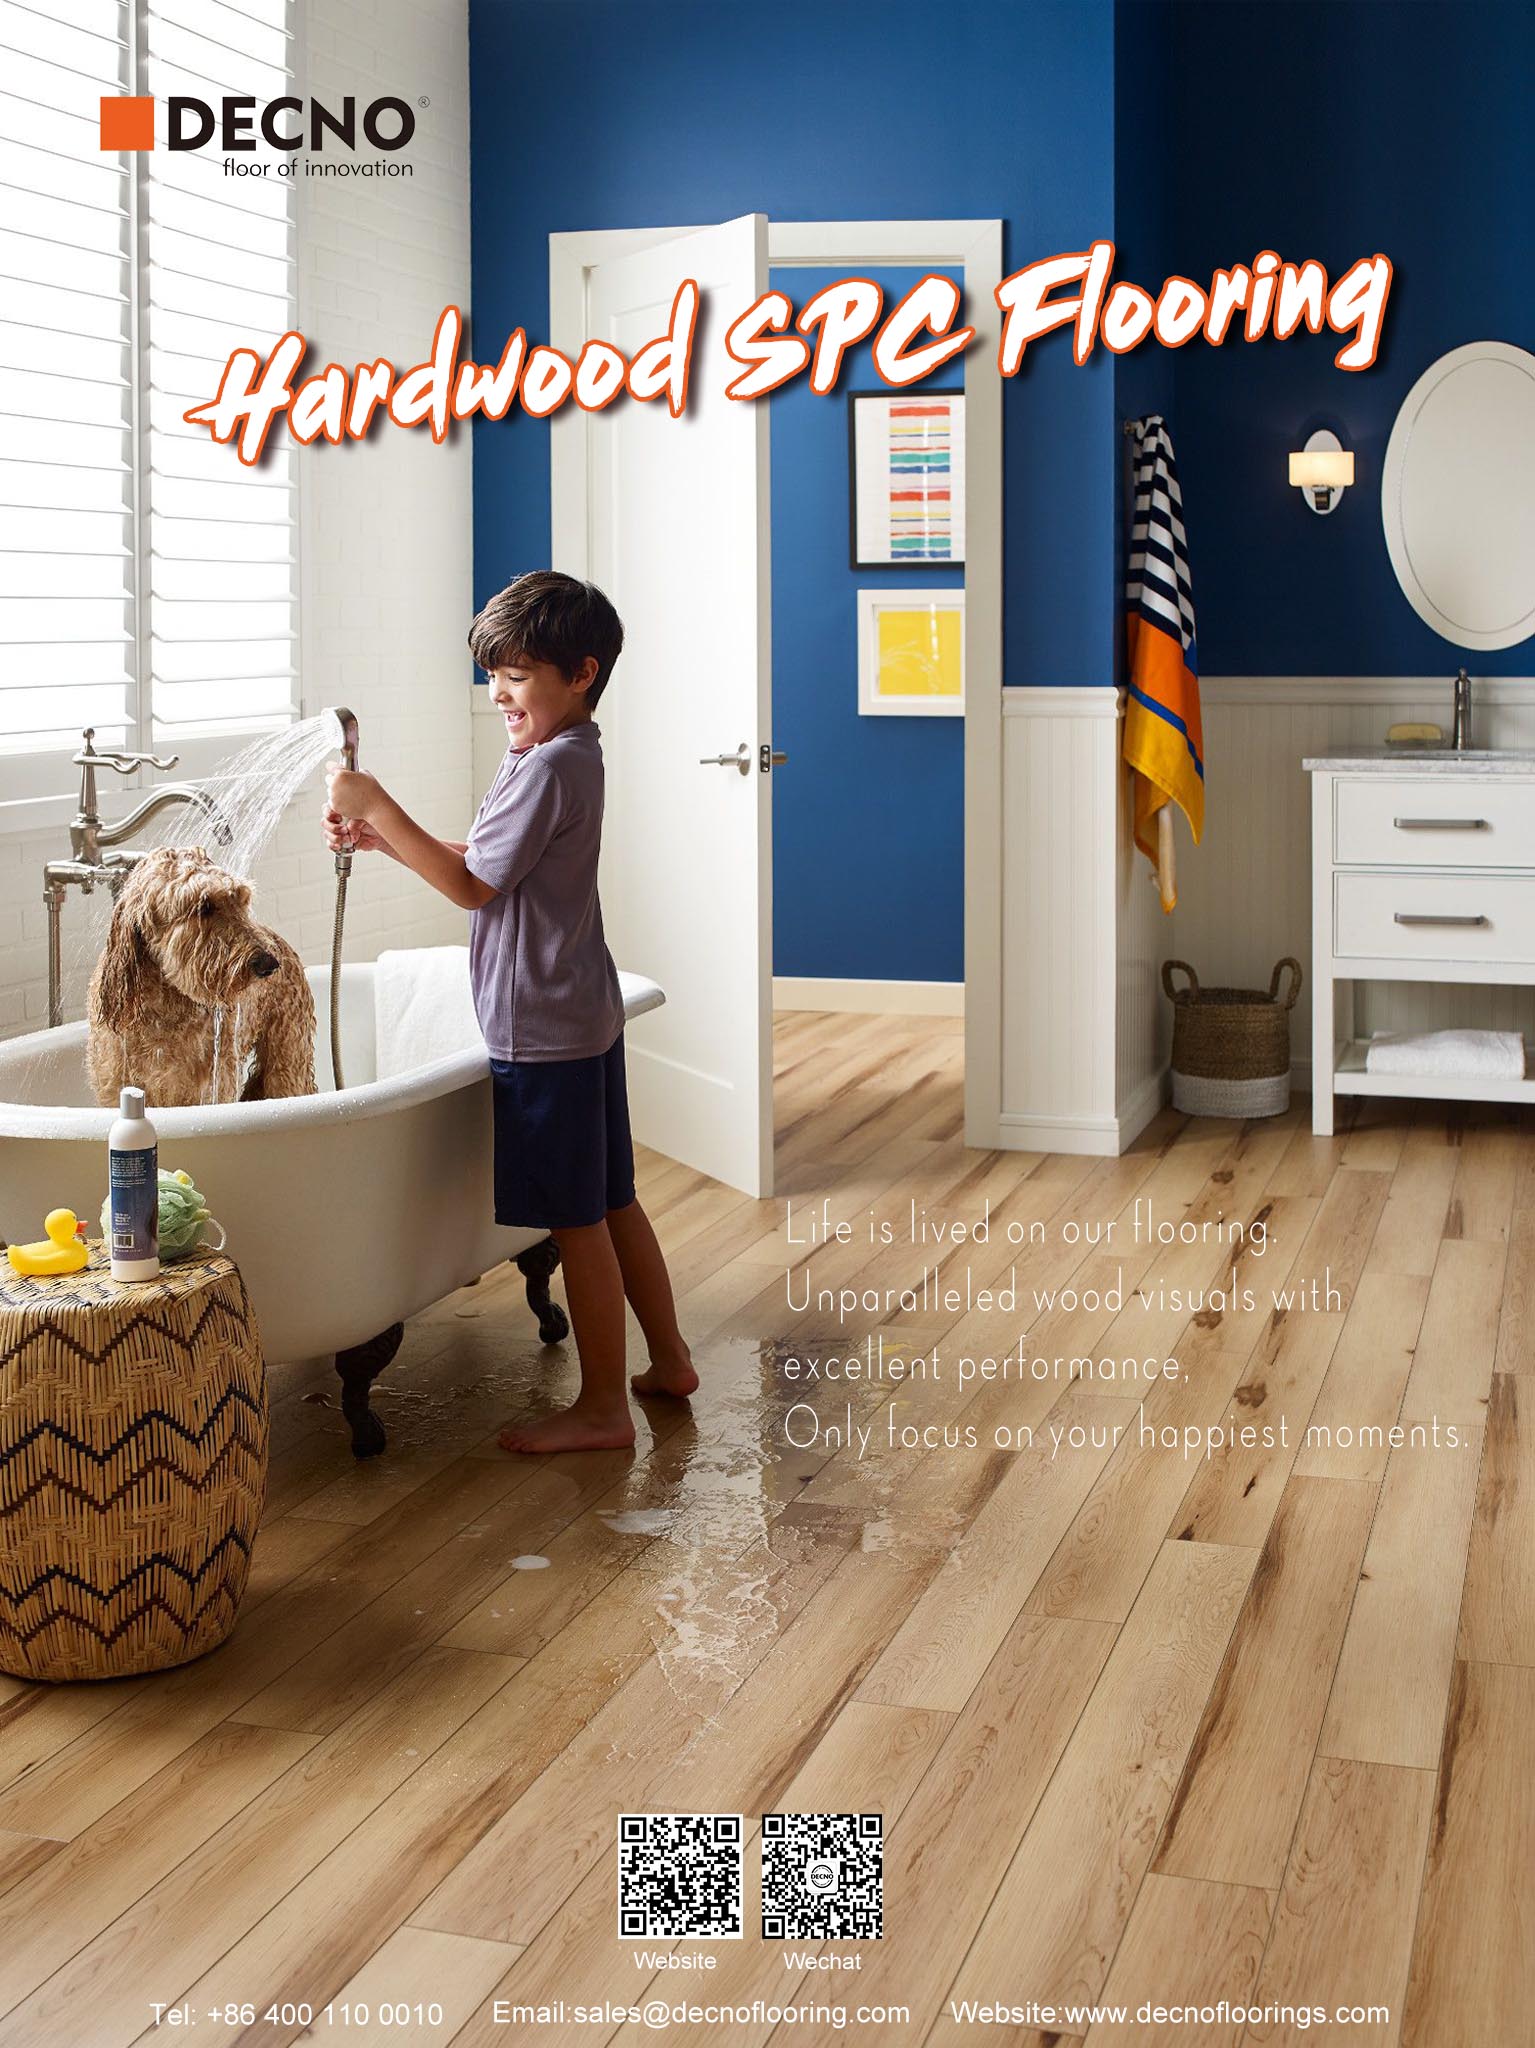 What is Hardwood SPC Flooring？